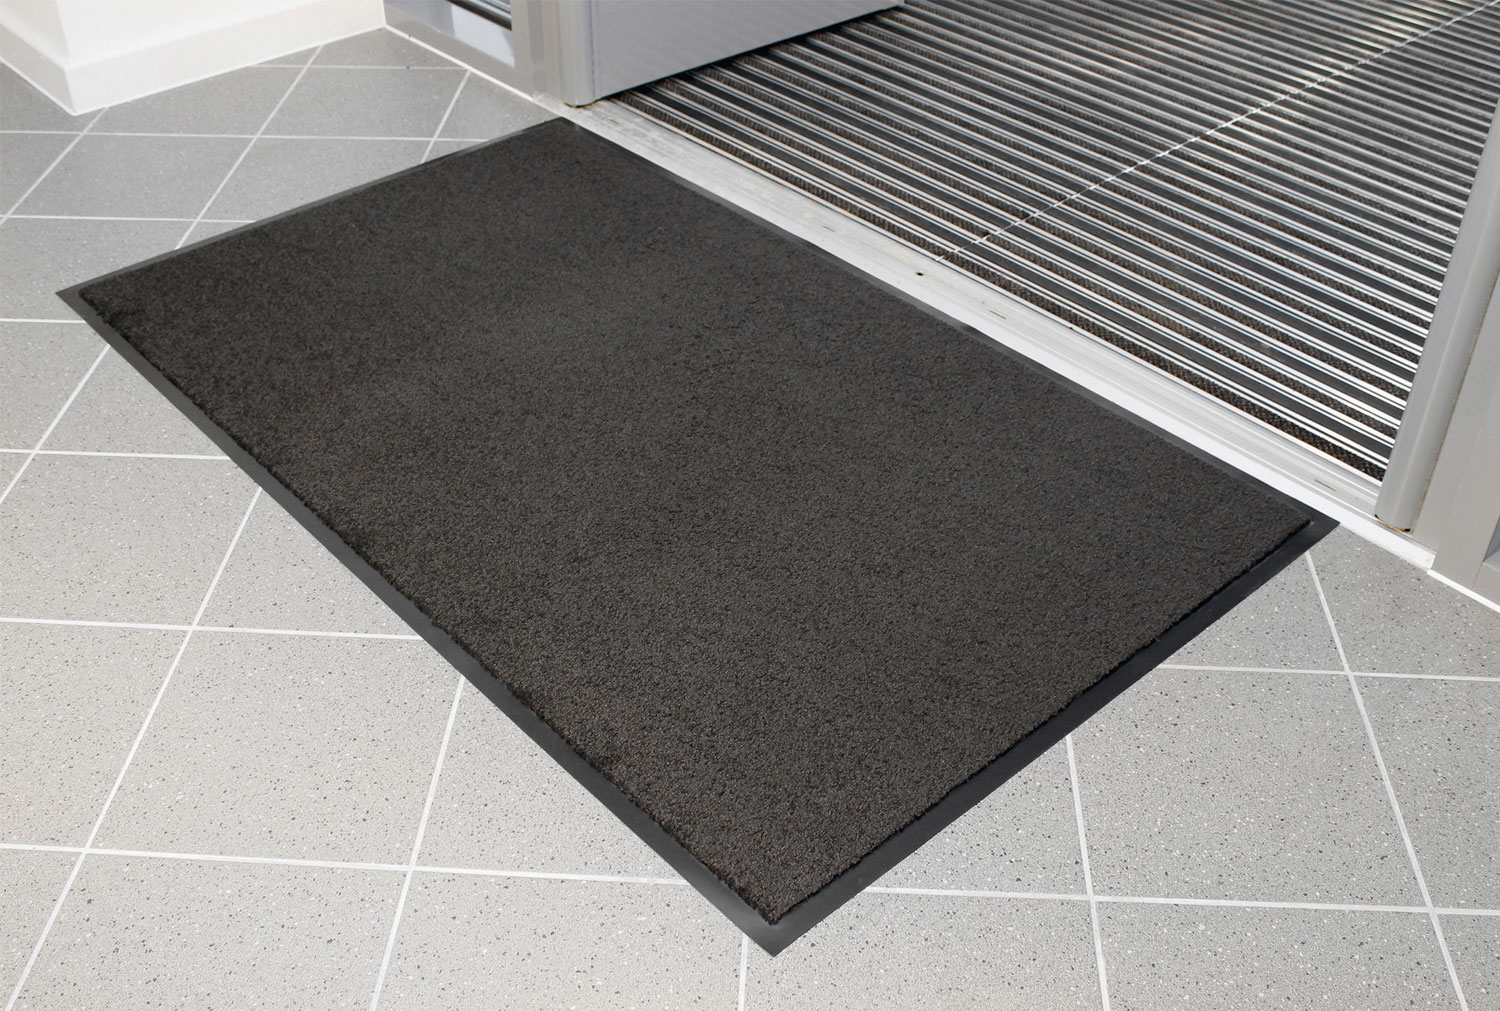 Entraplush Crush Resistant Carpet Doormat (Grey)